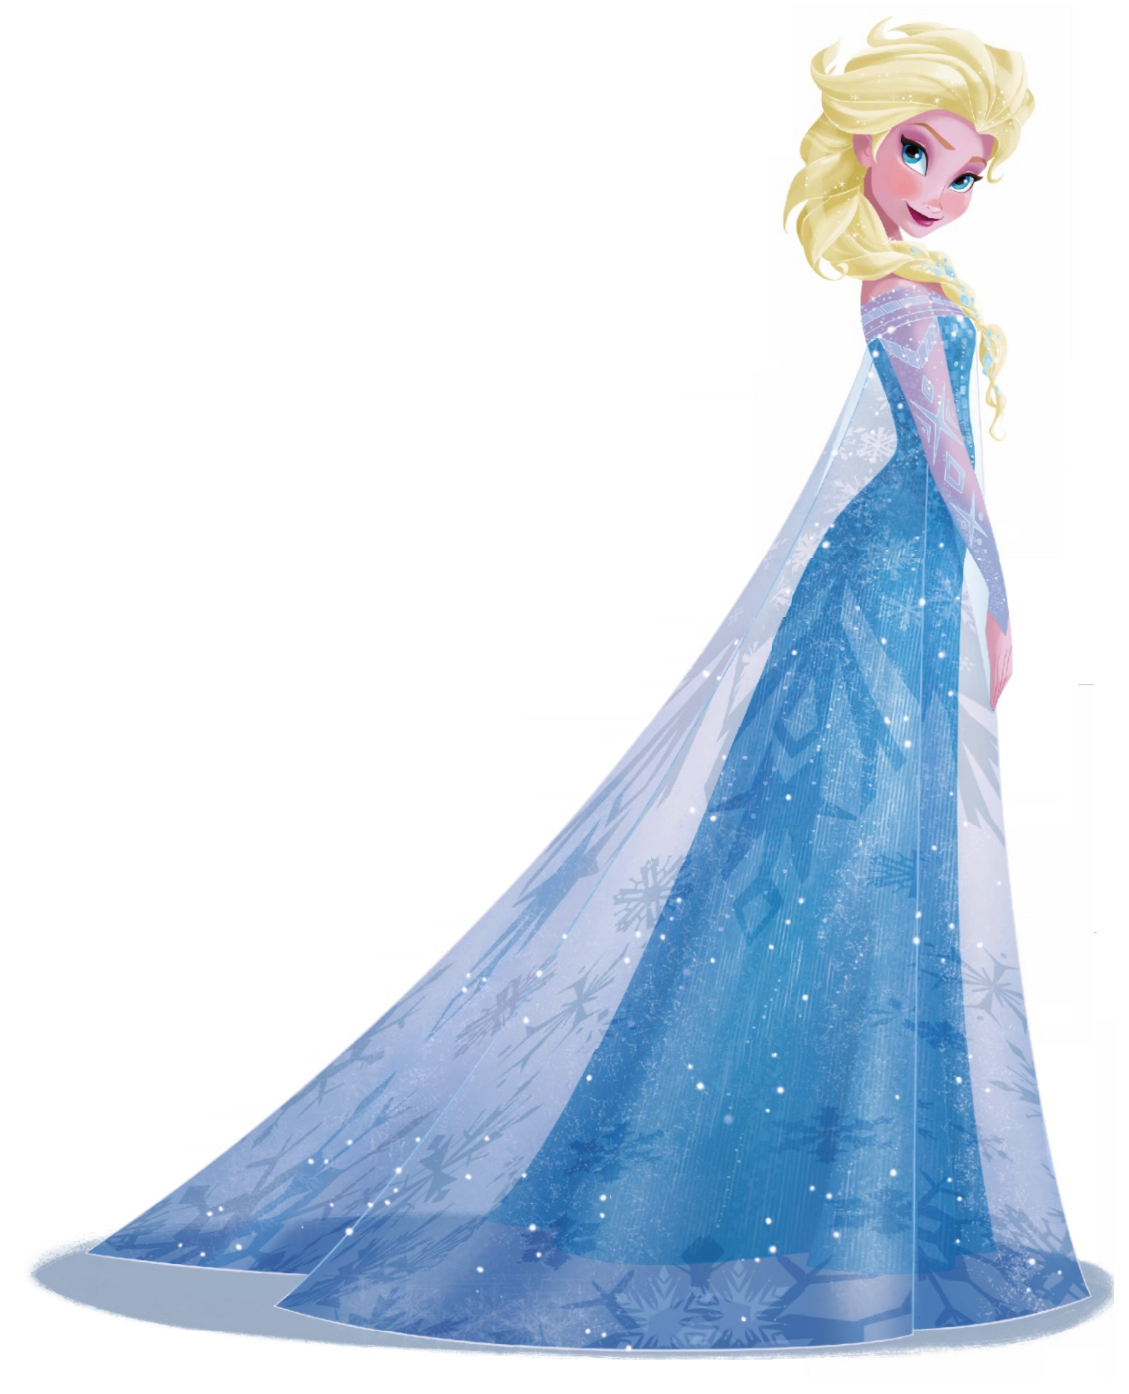 Elsa 2d   Frozen Photo  35607460    Fanpop